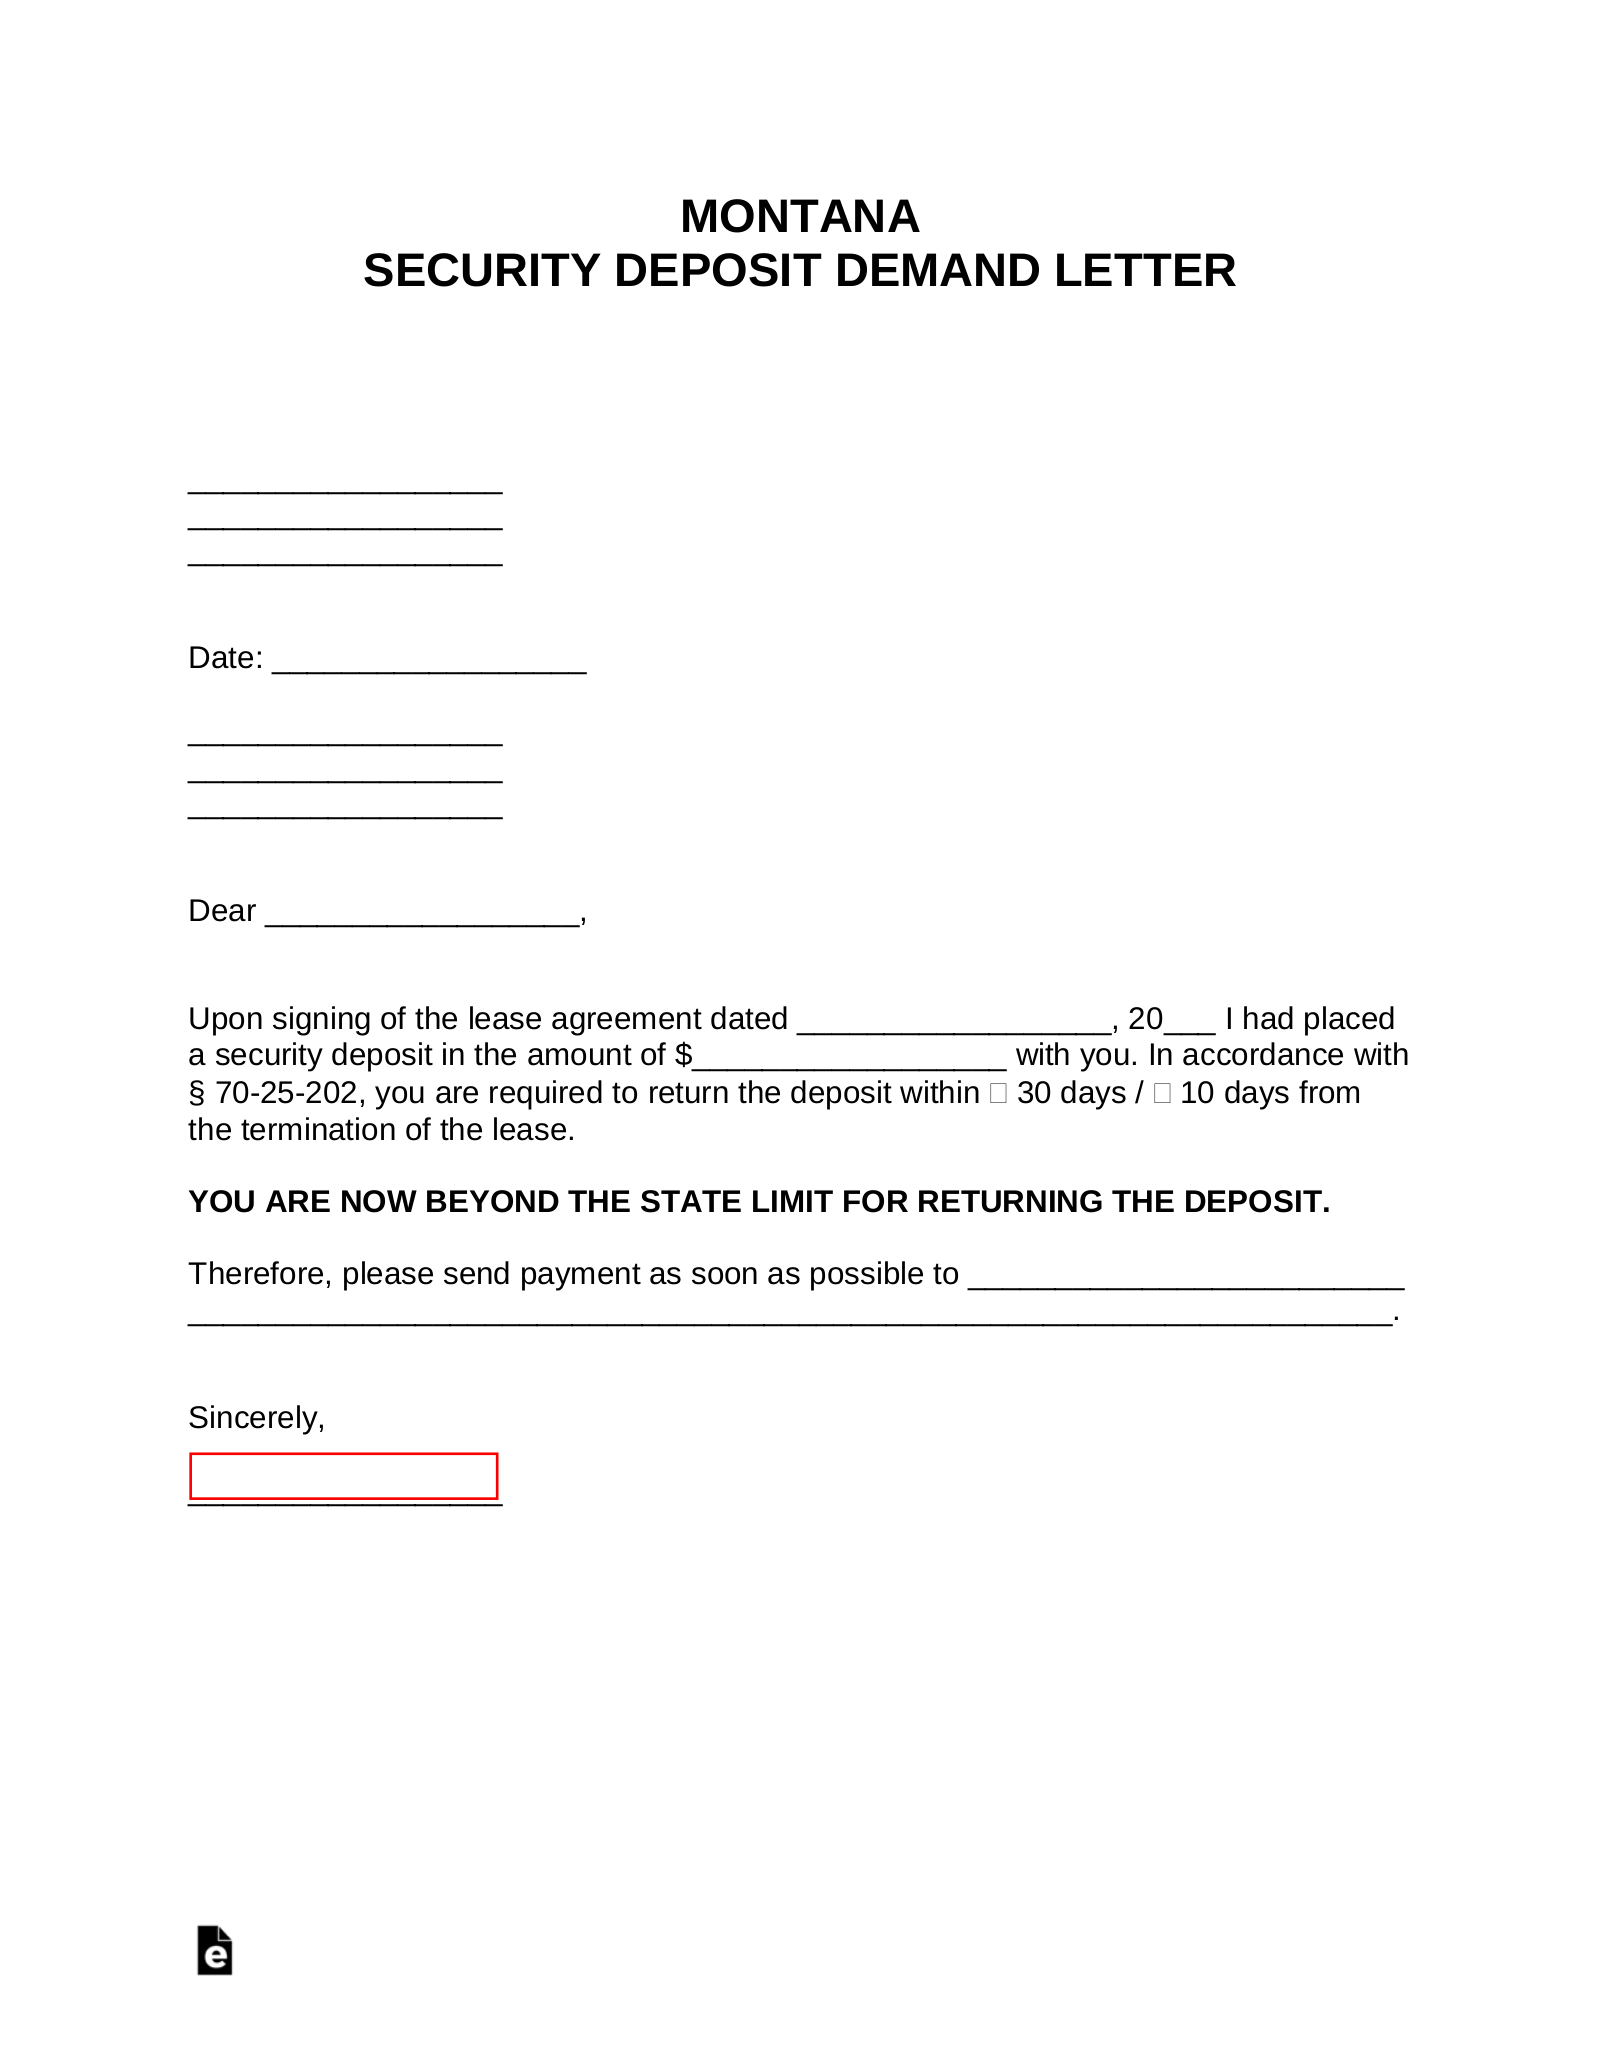 Montana Security Deposit Demand Letter